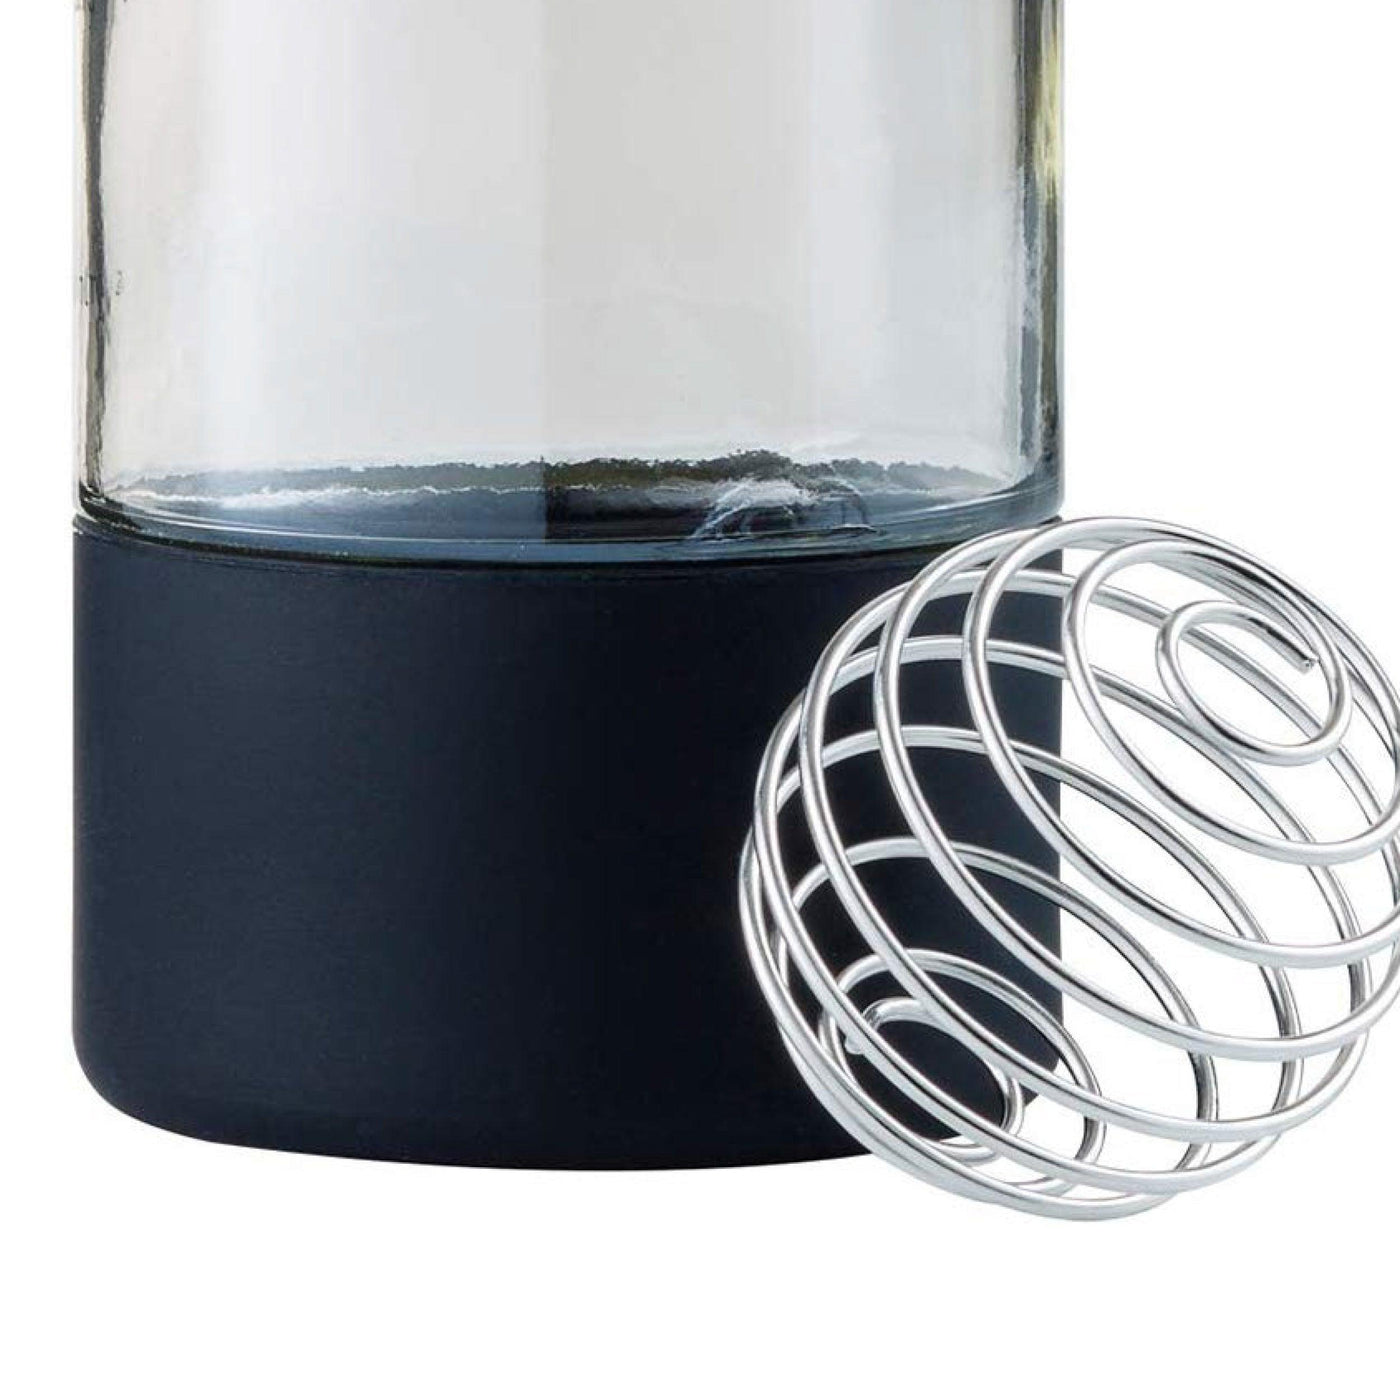 BlenderBottle Mantra Glass 20oz Shaker Bottle for Protein Mixes